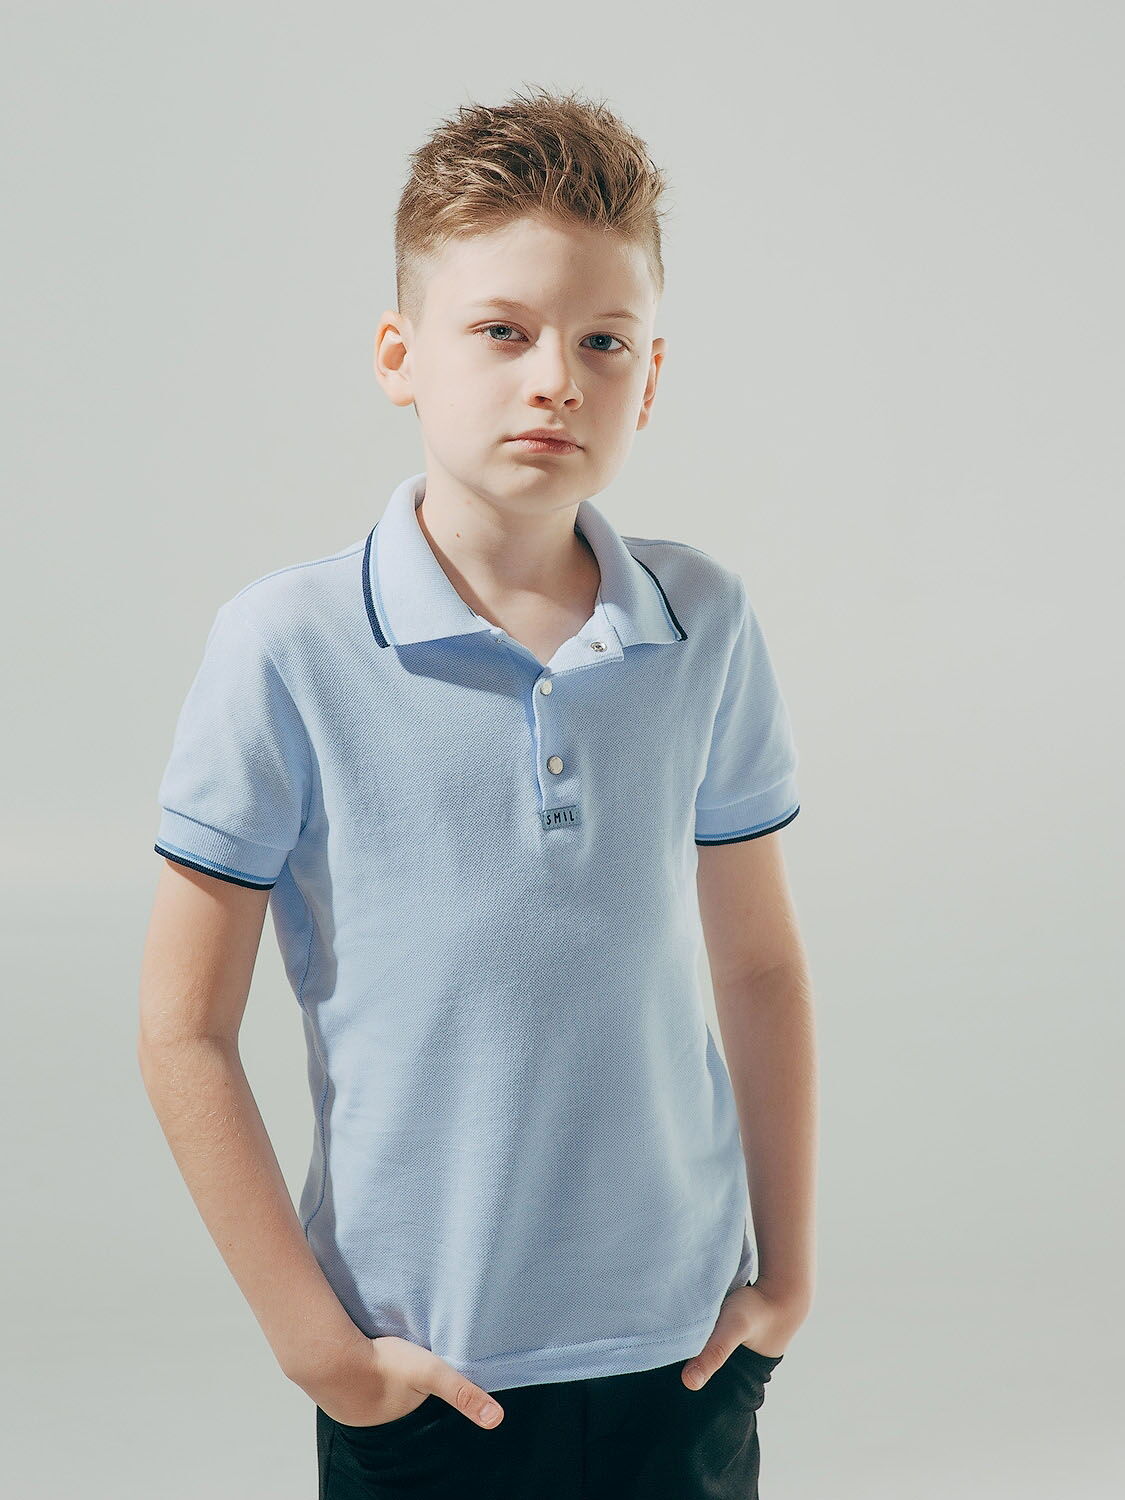 Футболка-поло с коротким рукавом для мальчика SMIL голубая 114595 - цена